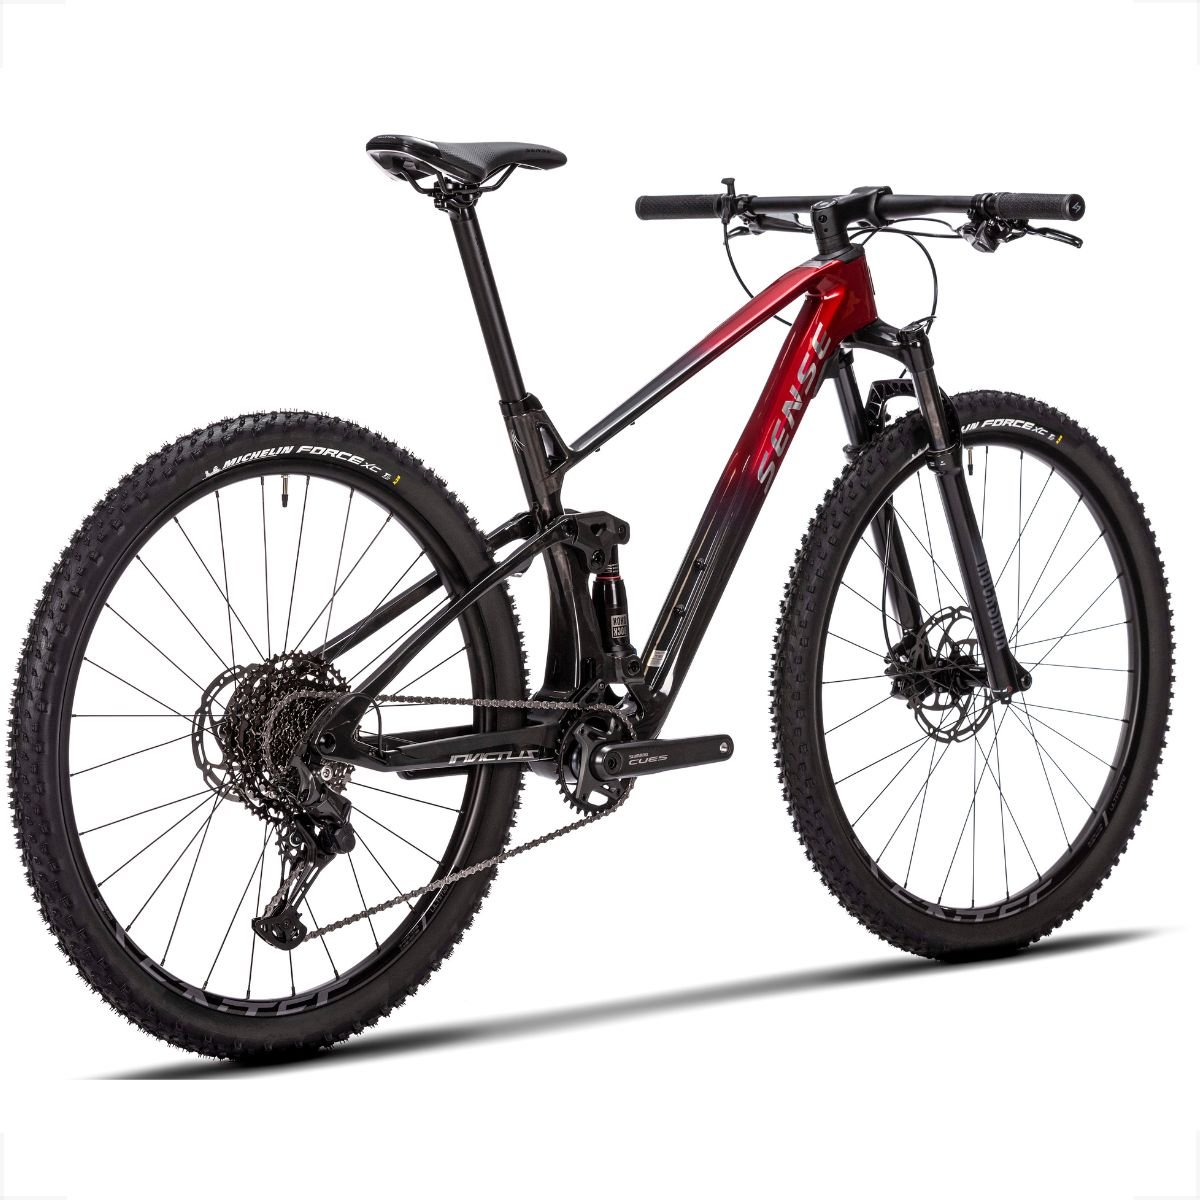 Bicicleta Full Sense Invictus Sport Carbono Shimano Cues:vermelho+preto/17 - 3